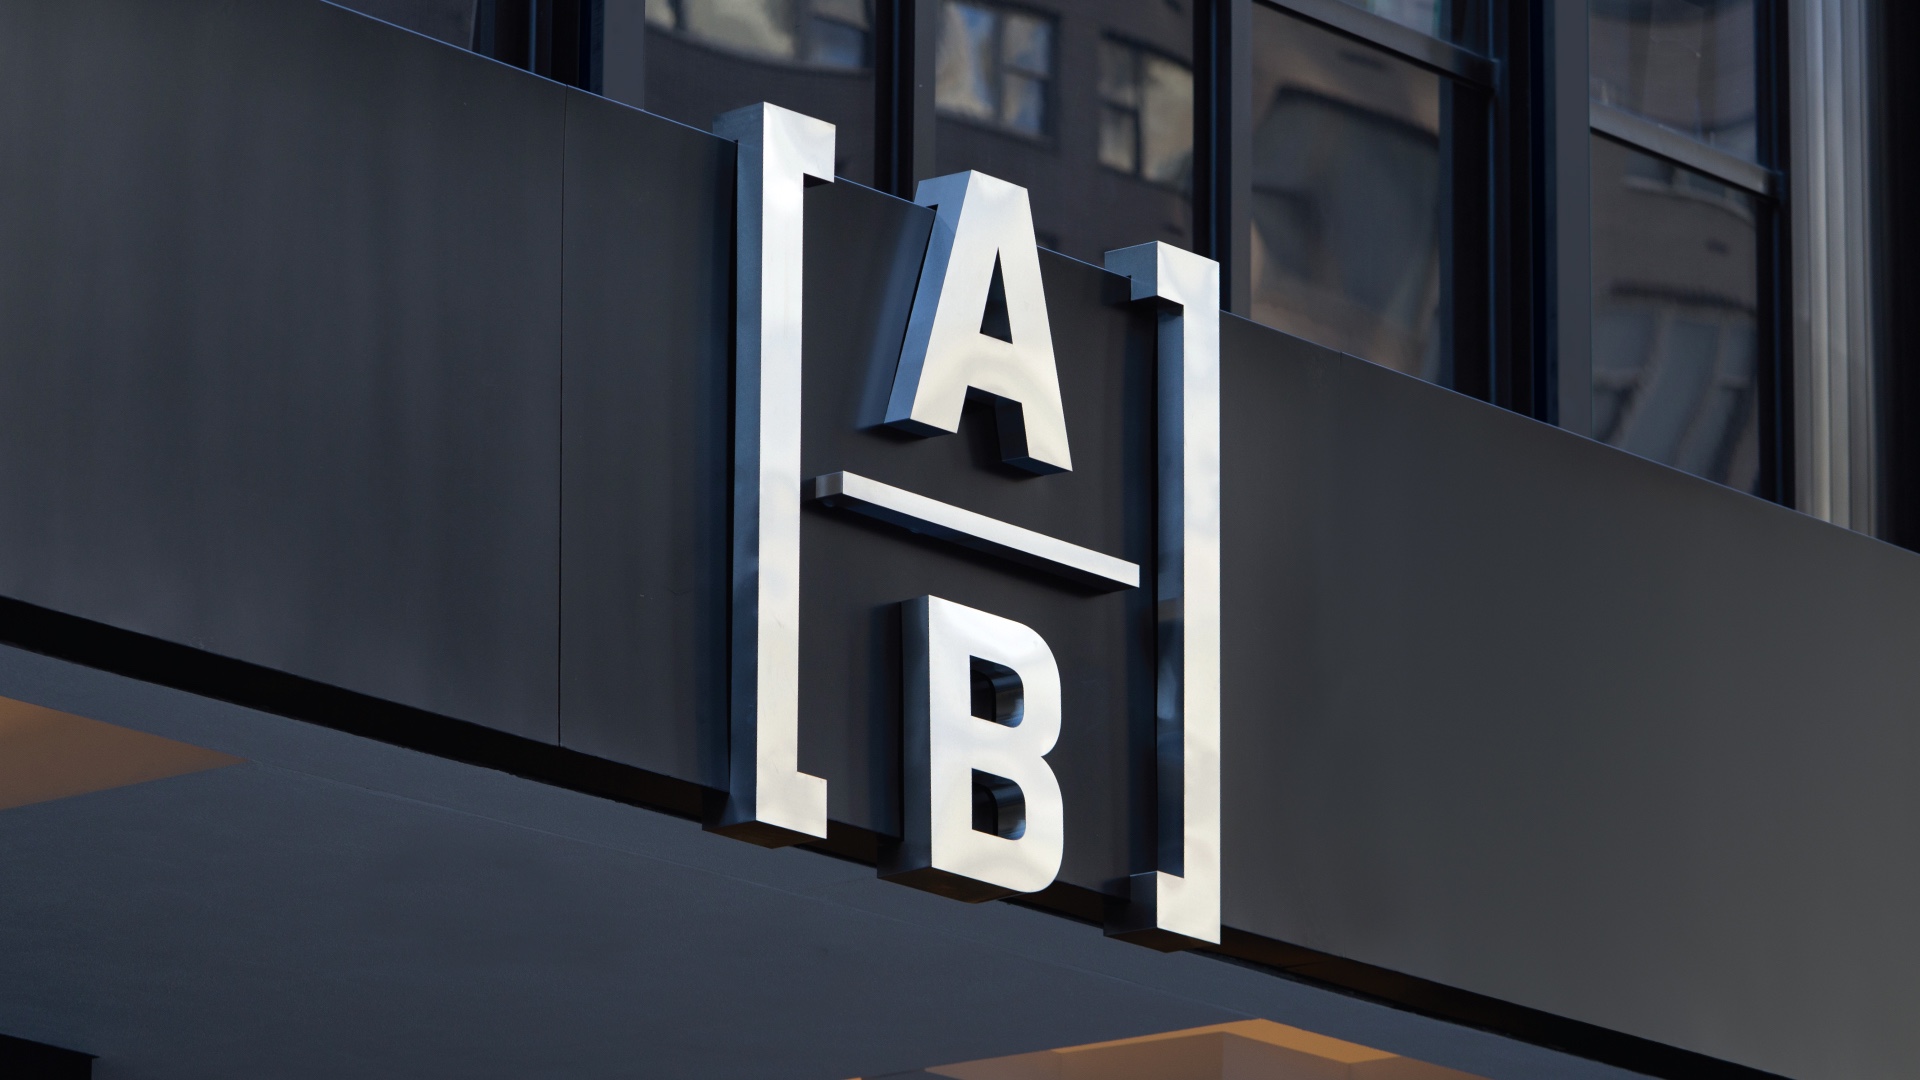 the new AB (AllianceBernstein) logo on the main facade of a building